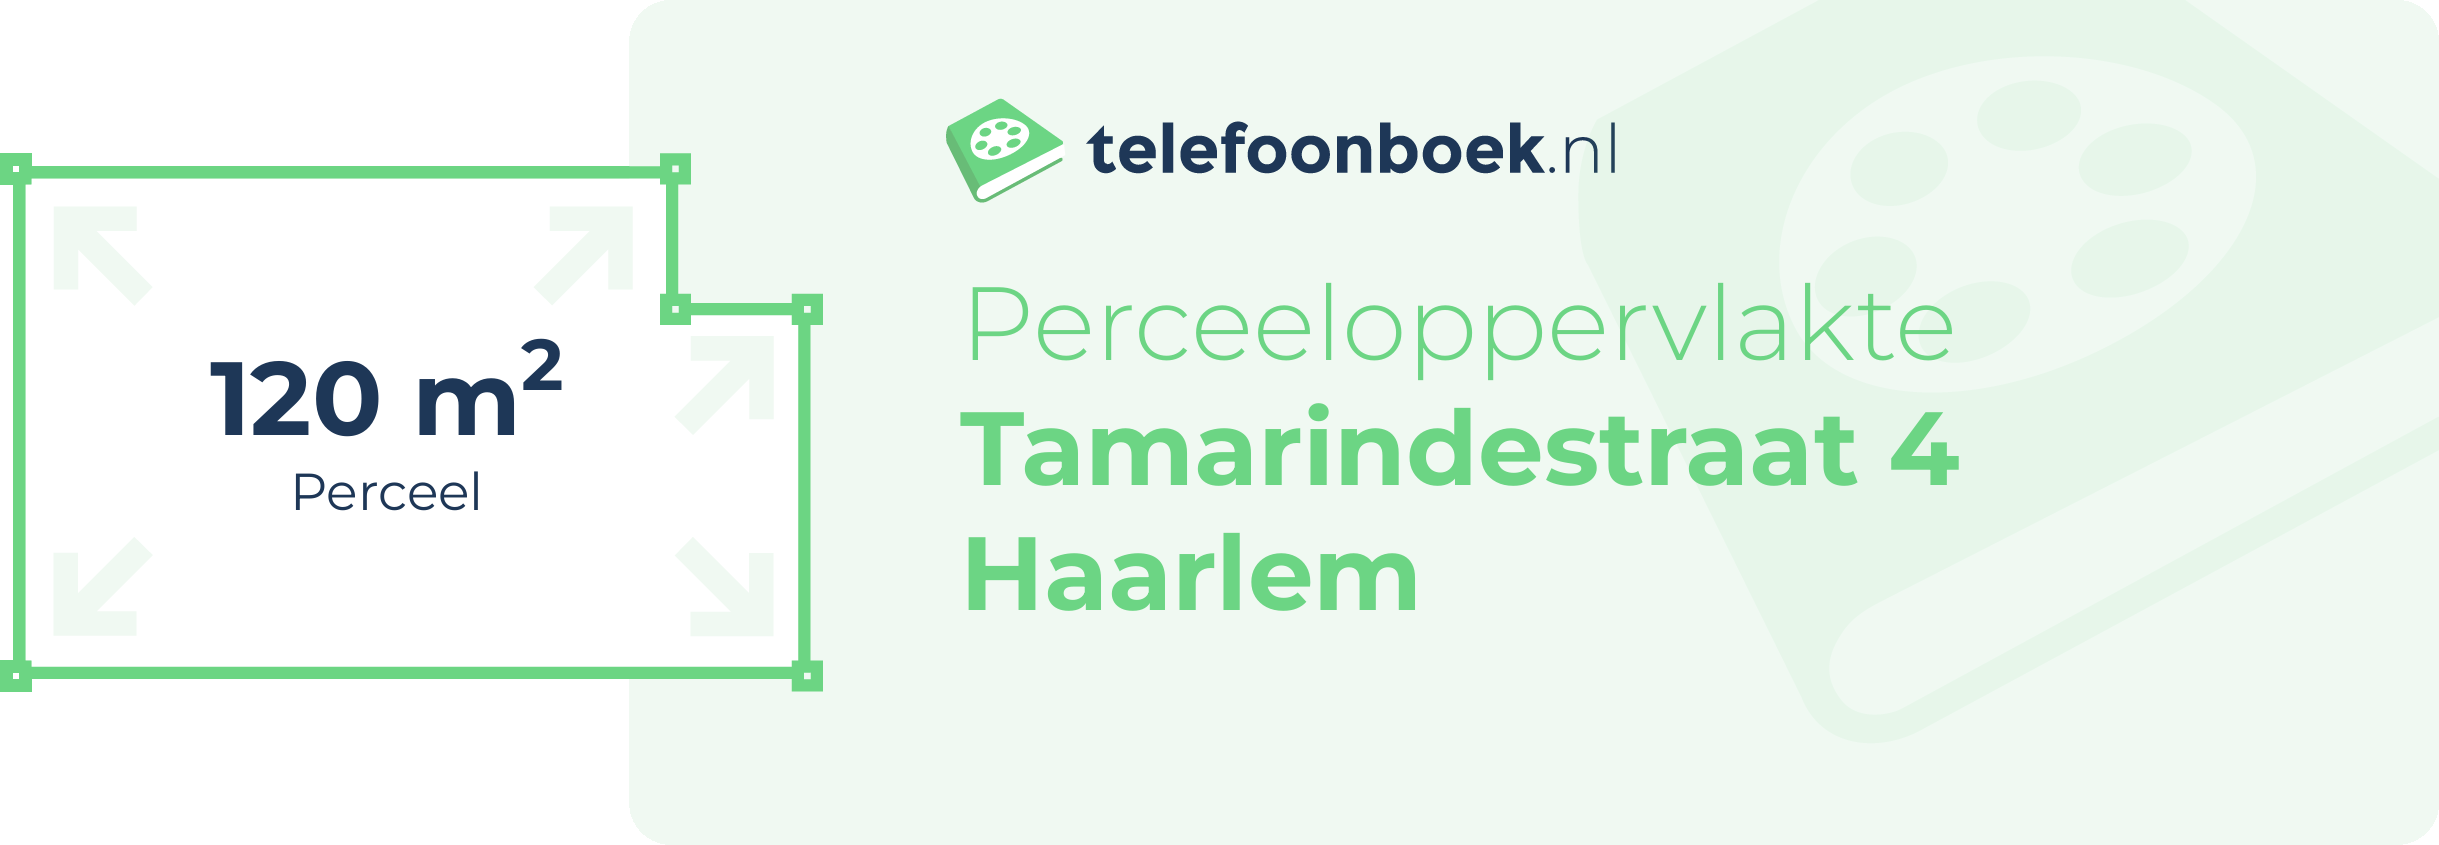 Perceeloppervlakte Tamarindestraat 4 Haarlem